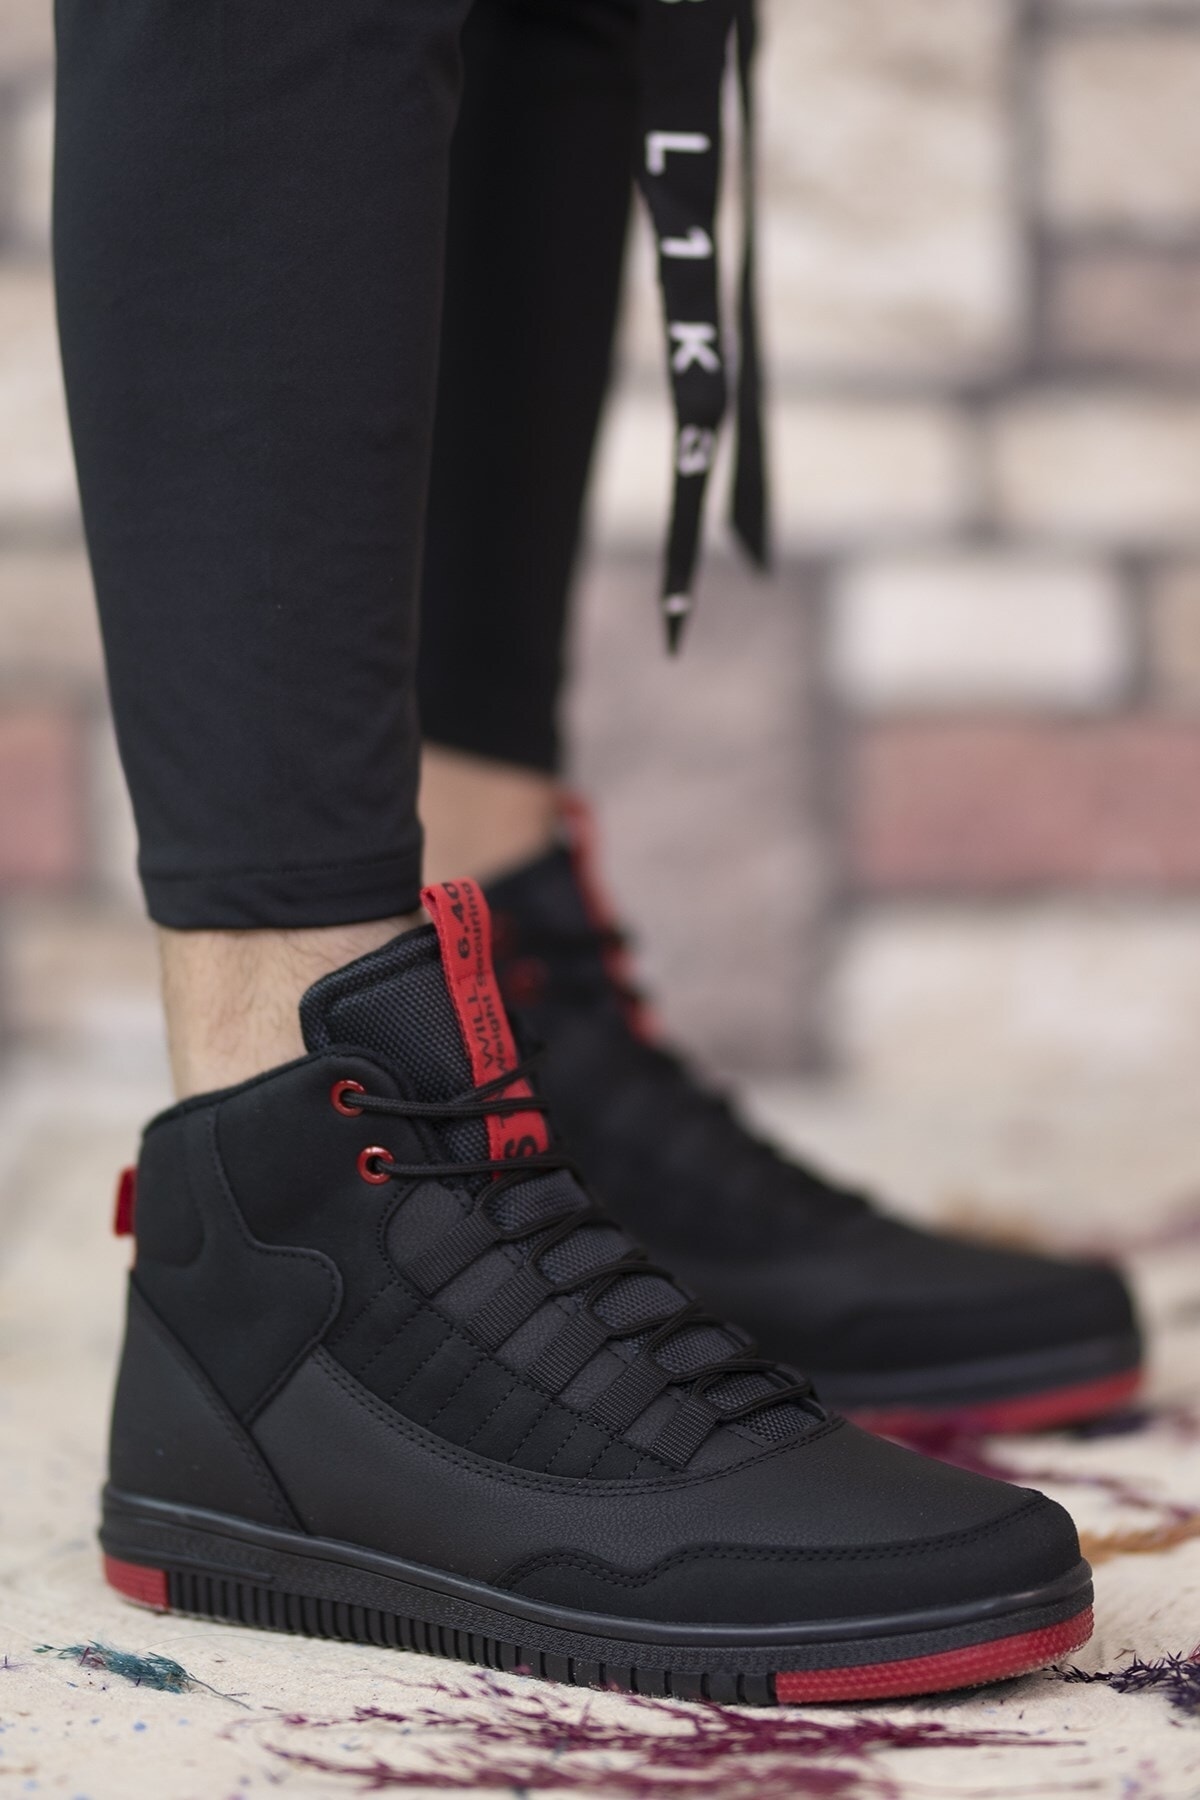 Riccon Black Red Men's Sneaker Boots 00122262